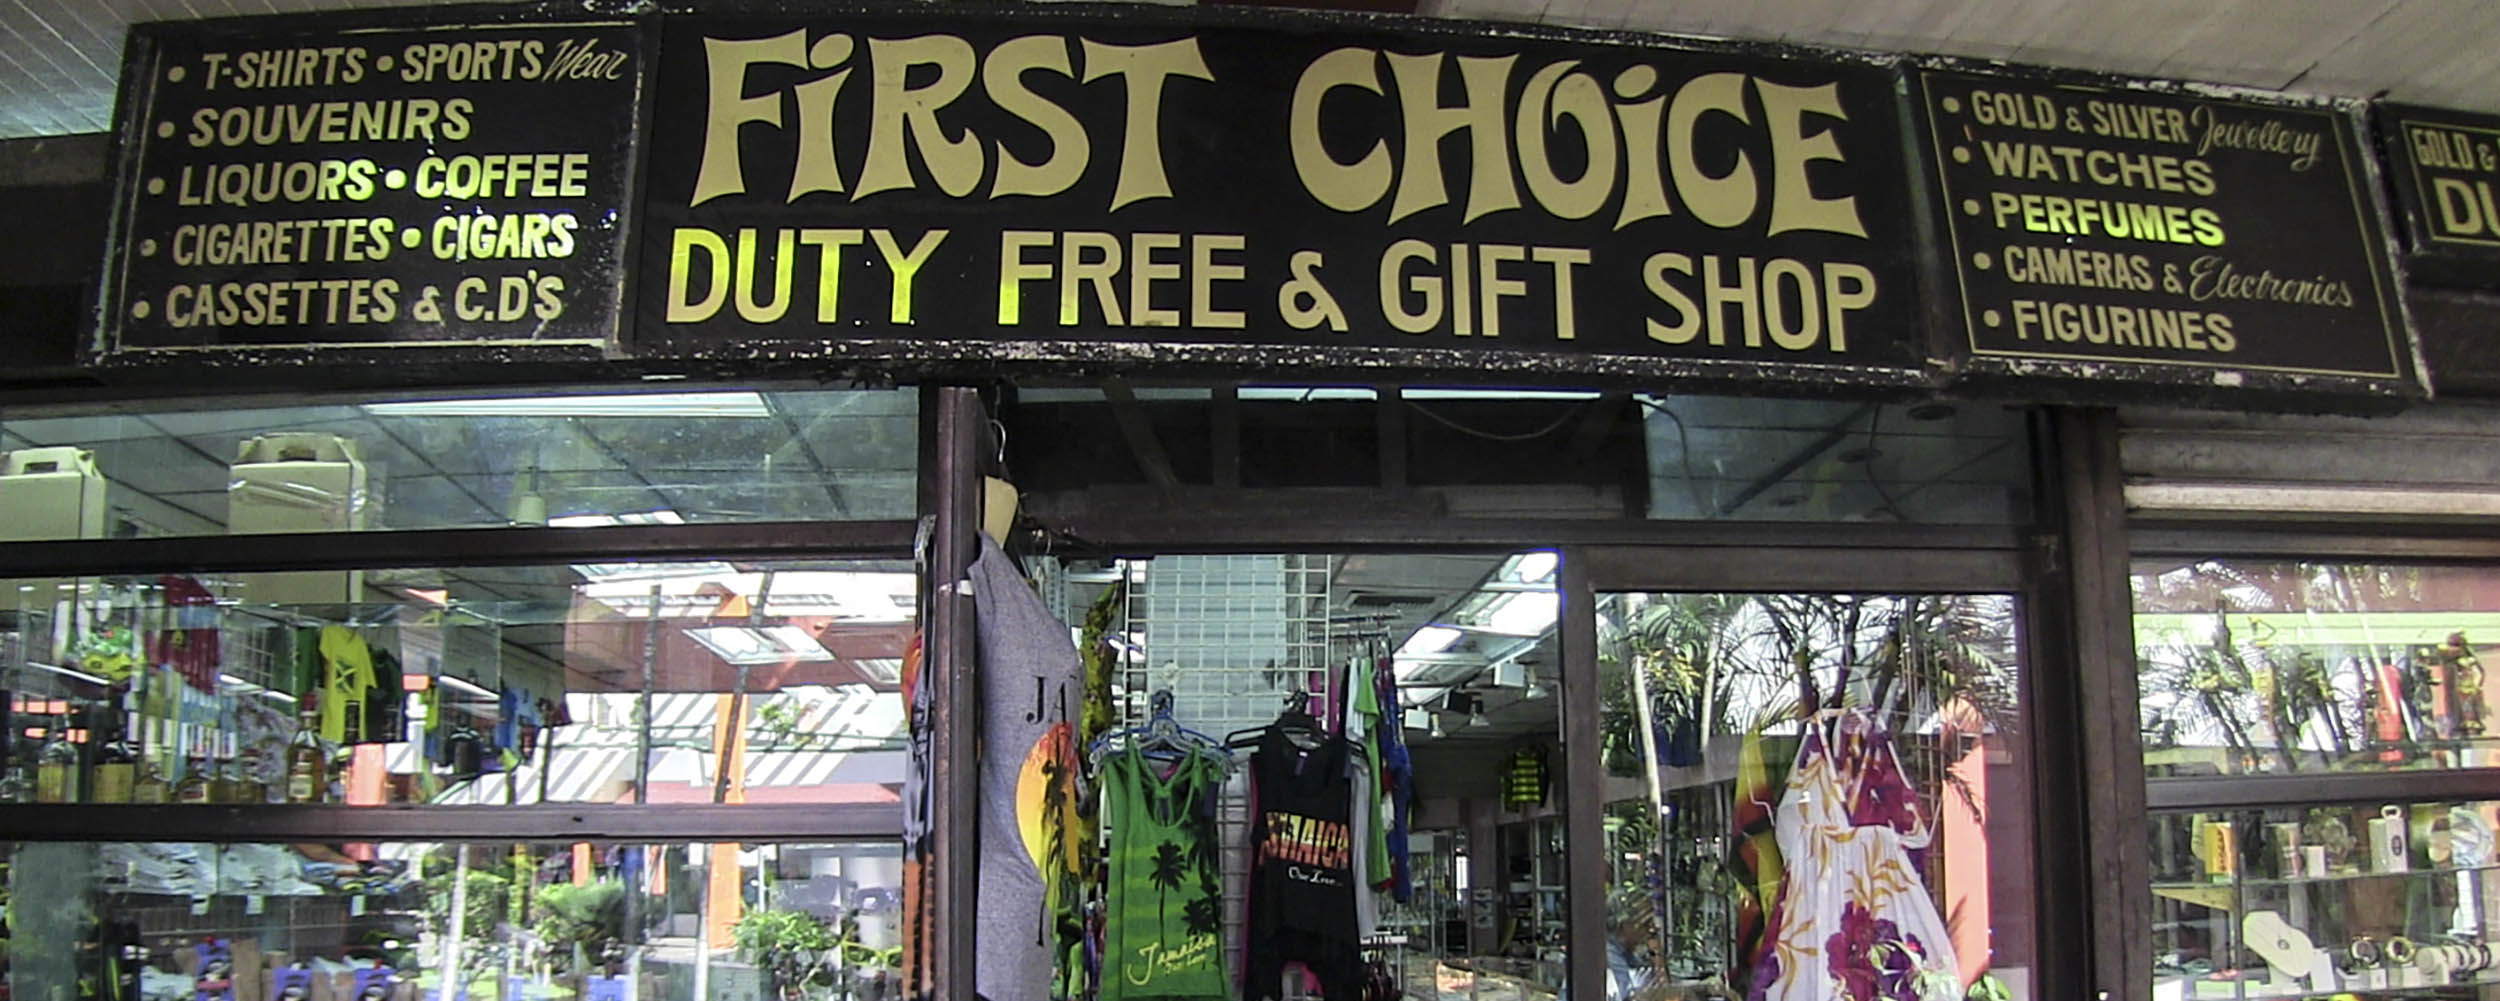 First Choice Duty Free - Sunshine Village Complex - Negril Jamaica